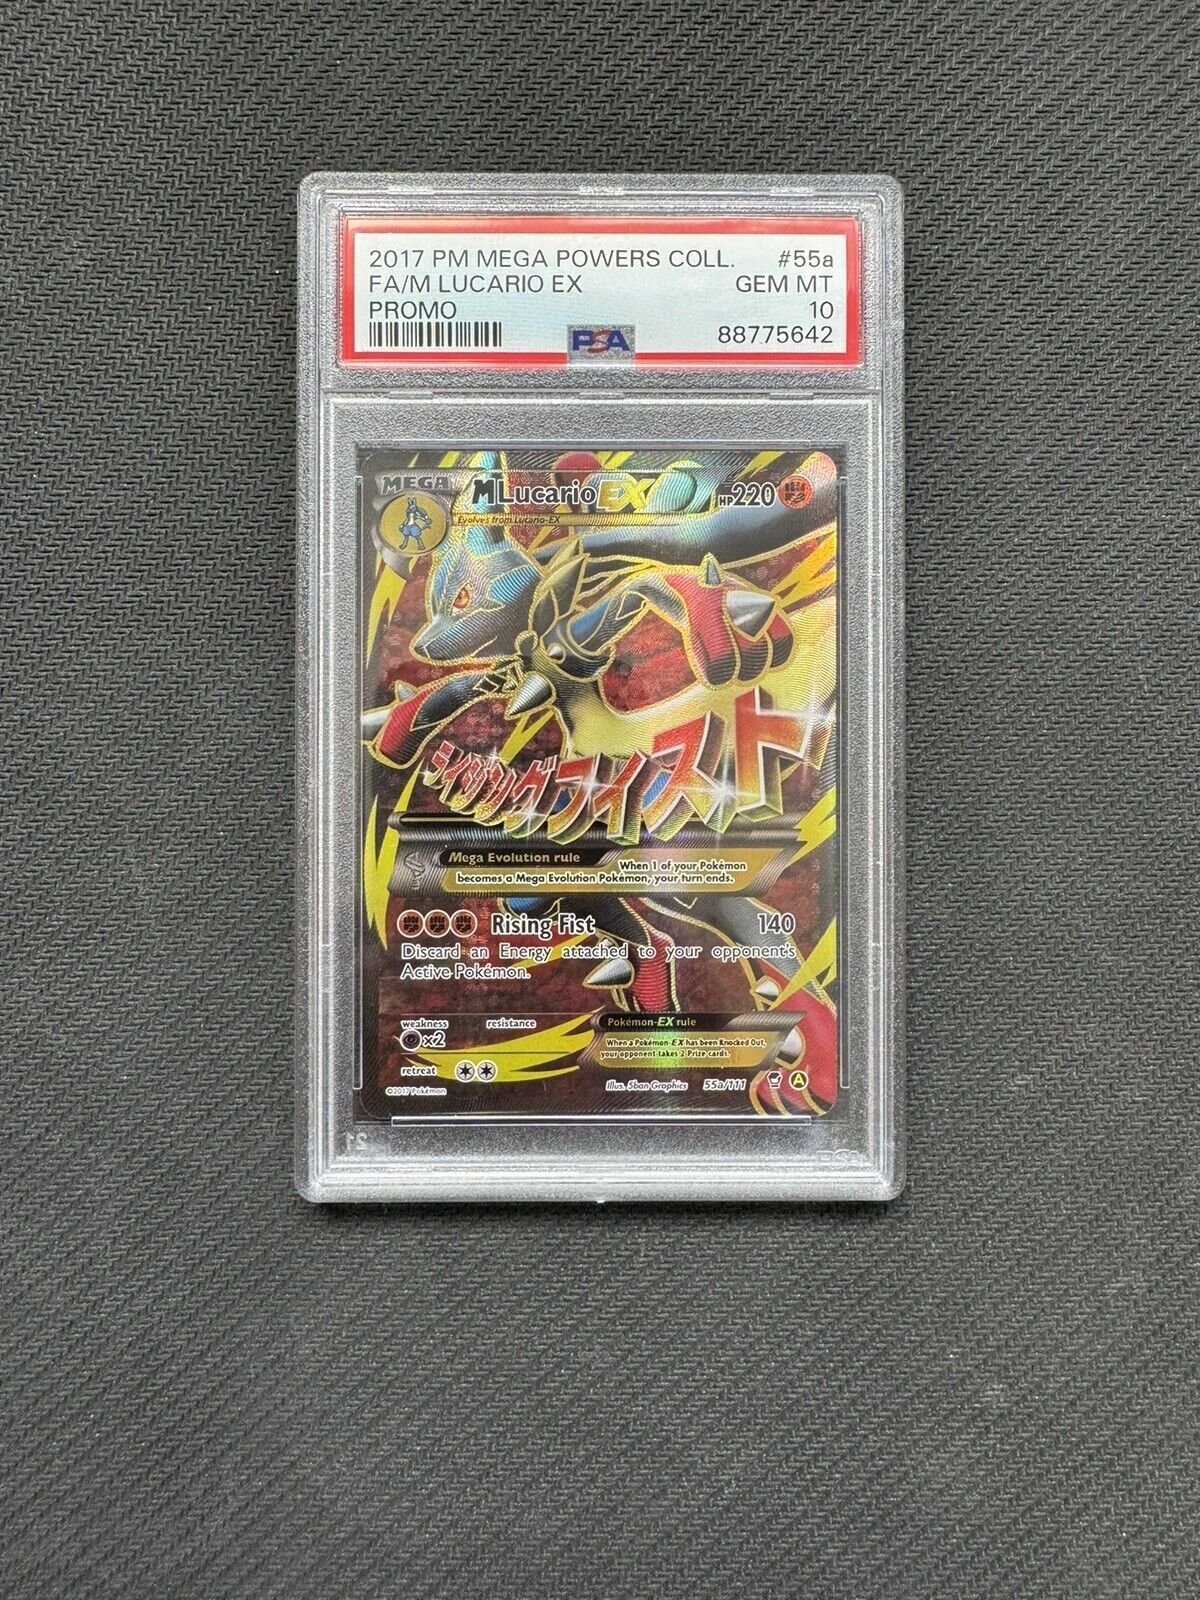 PSA 10 M Mega Lucario EX 55a/111 Full Art Ultra Rare Promo TCG Pokemon Card